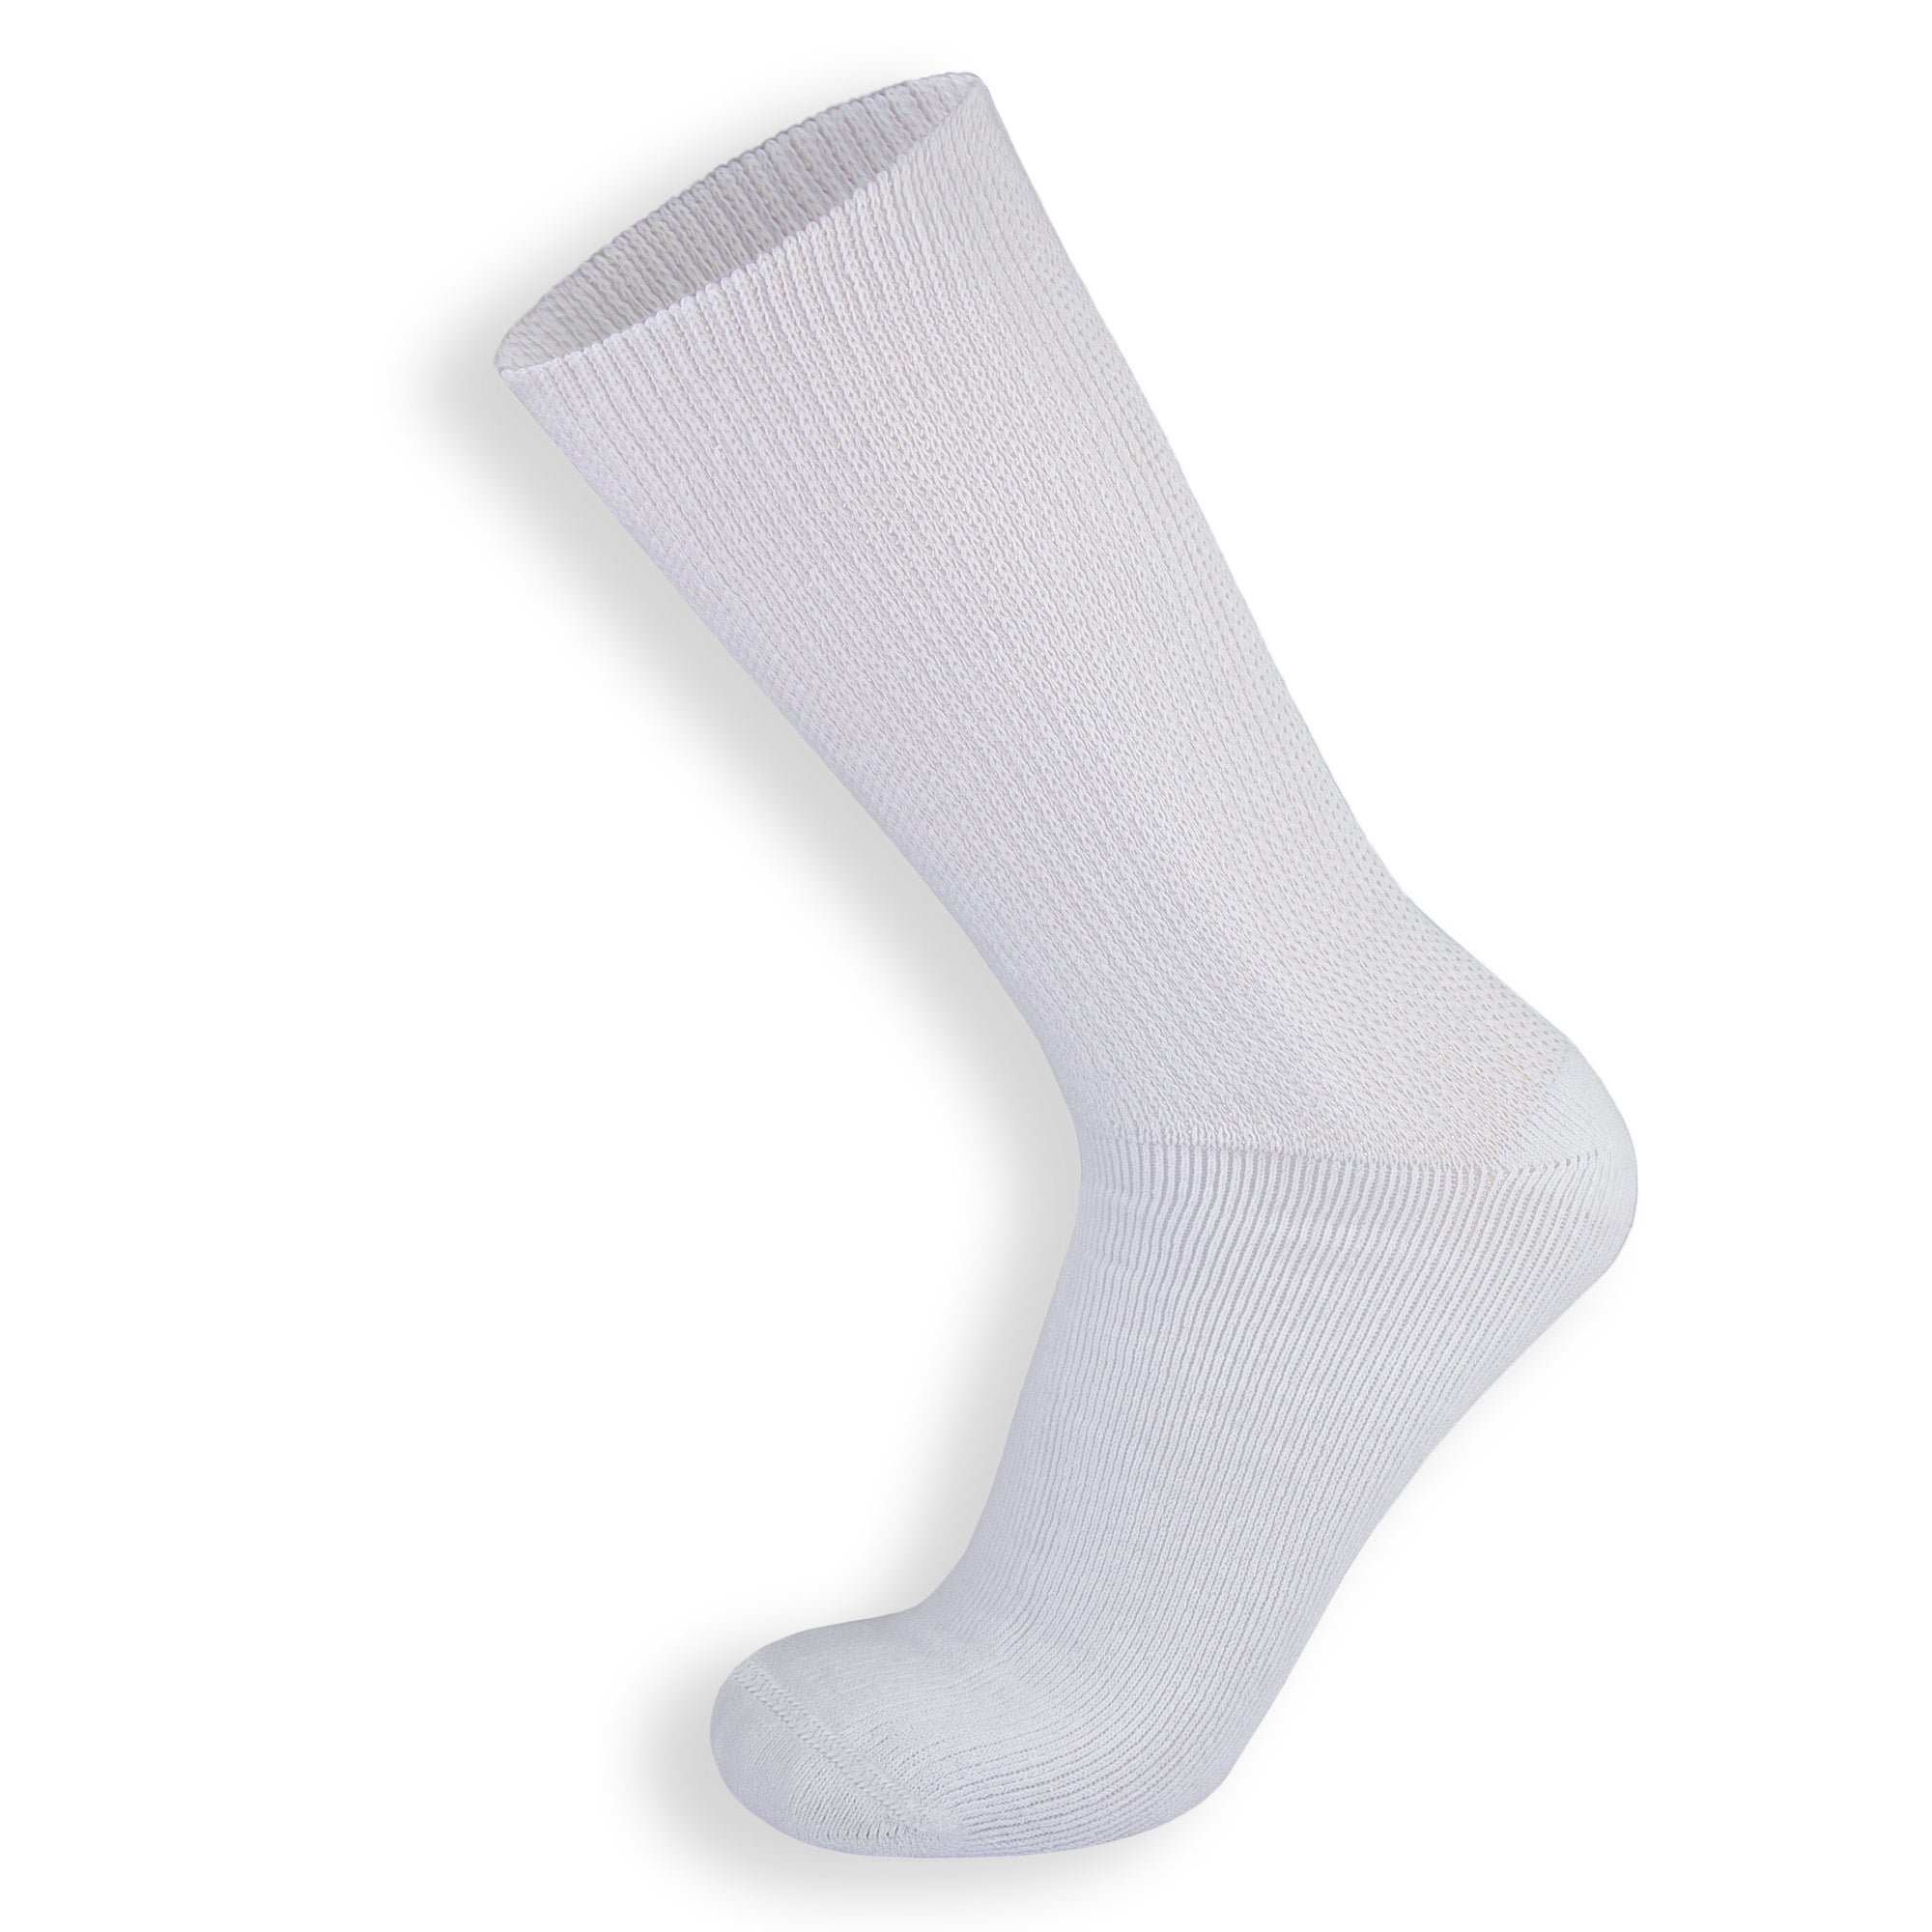 Extra Wide Diabetic Socks, Crew/Over-the-Calf  Medical Swollen Feet Socks